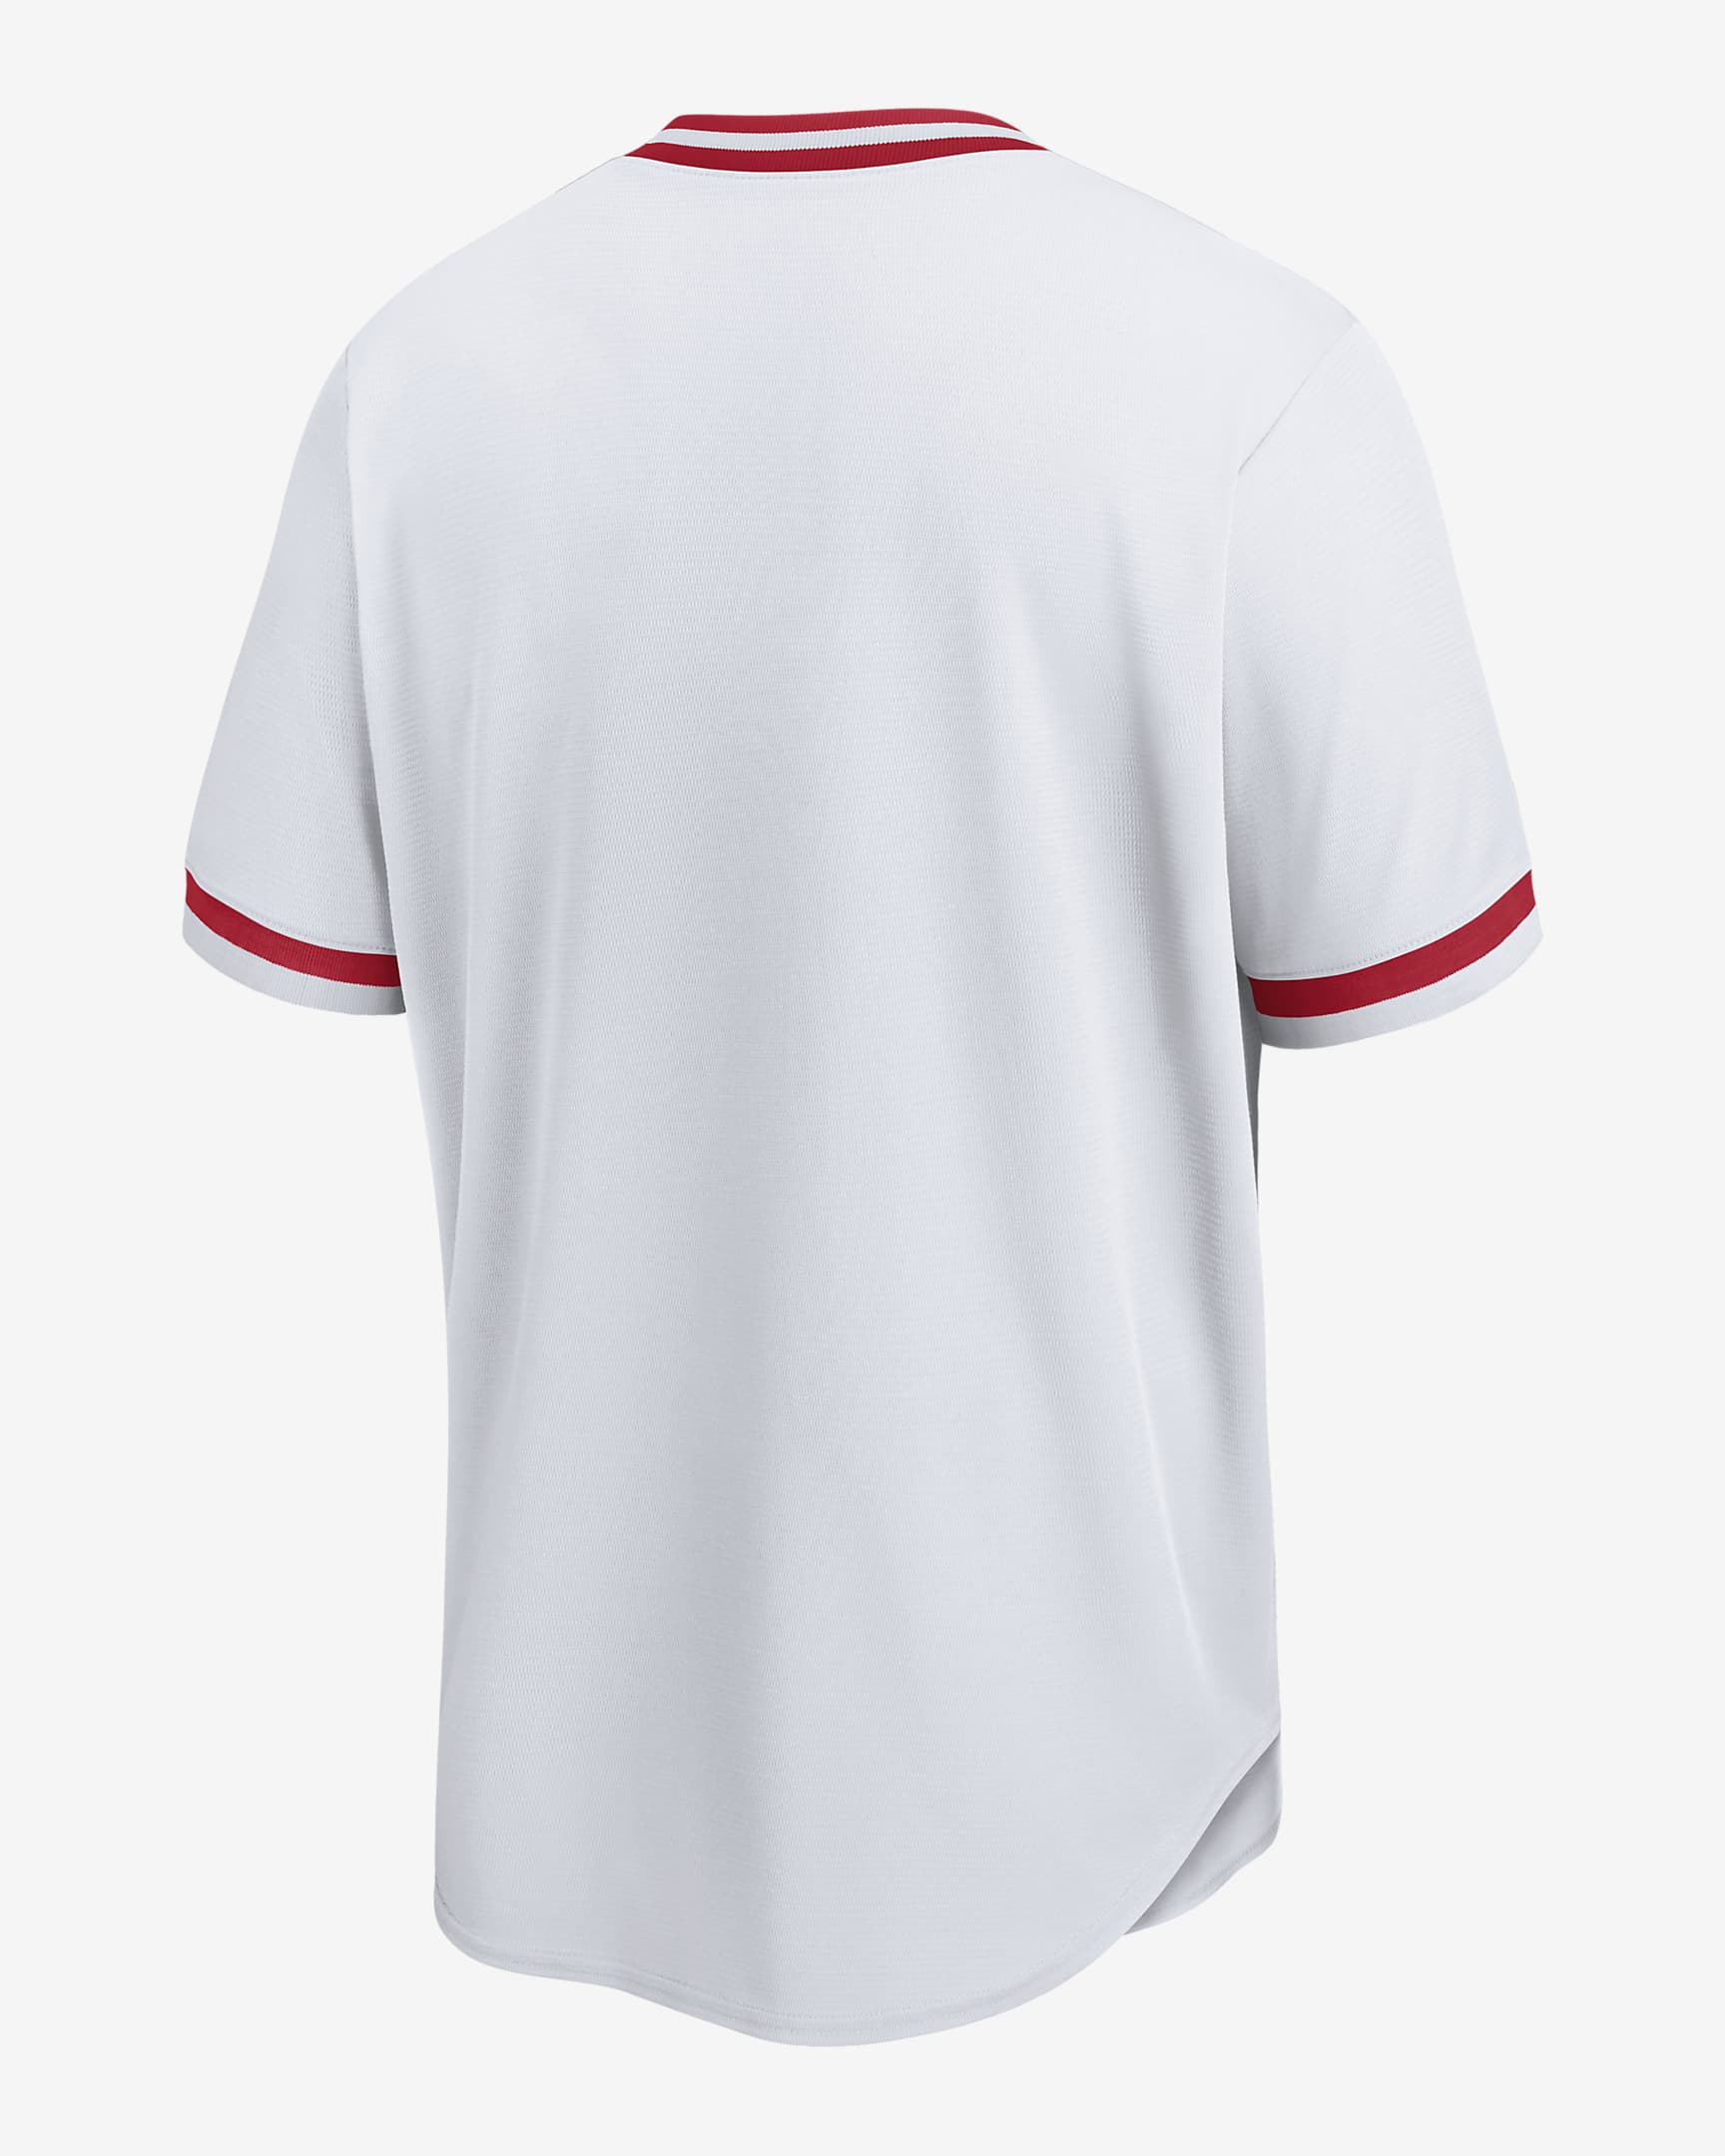 Camiseta de béisbol Cooperstown para hombre MLB Cincinnati Reds. Nike.com